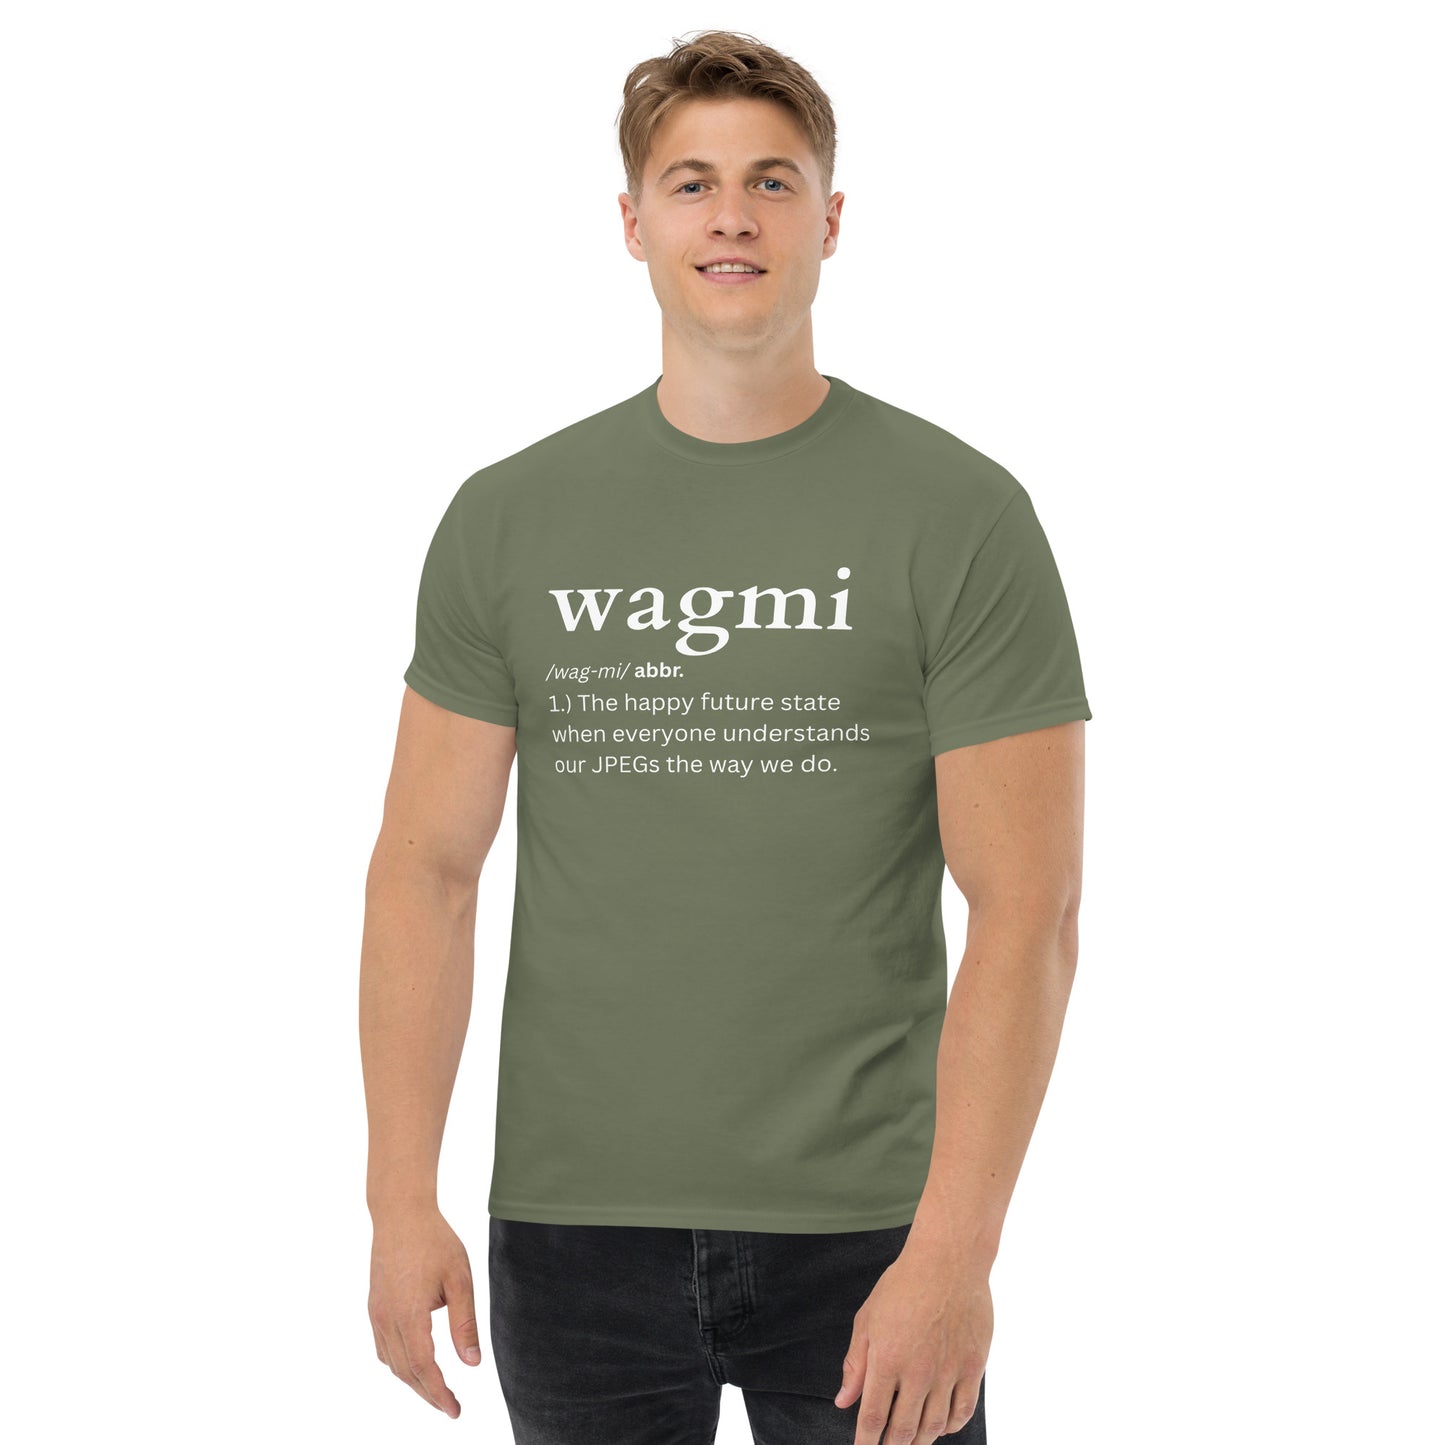 wagmi-tee-shirt-military-green